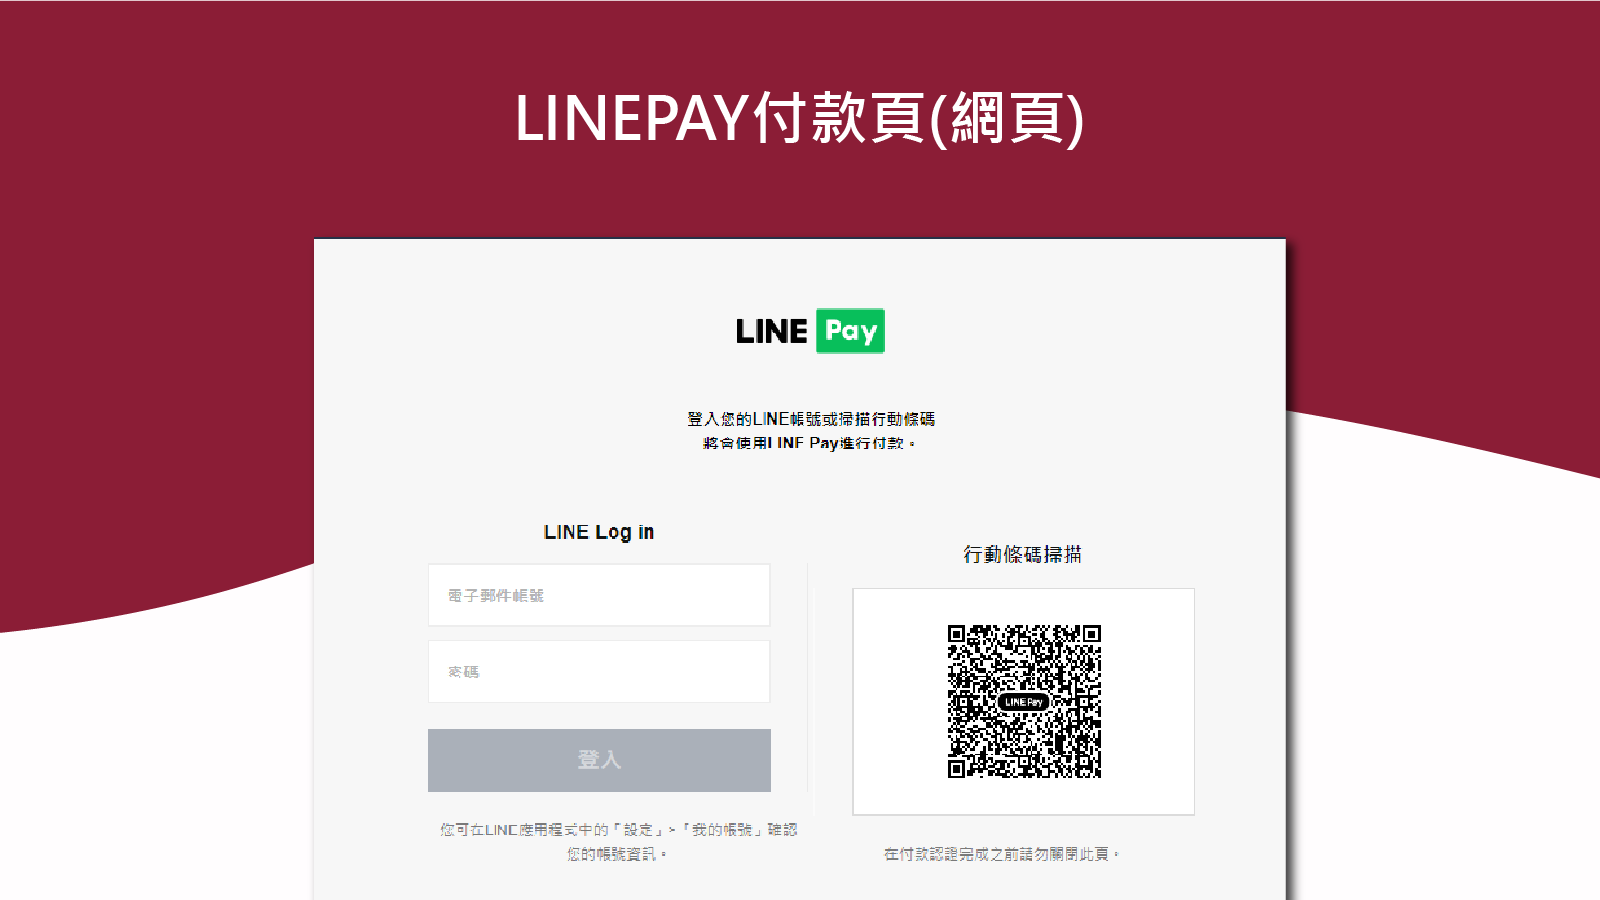 Line pay 付款(網頁)